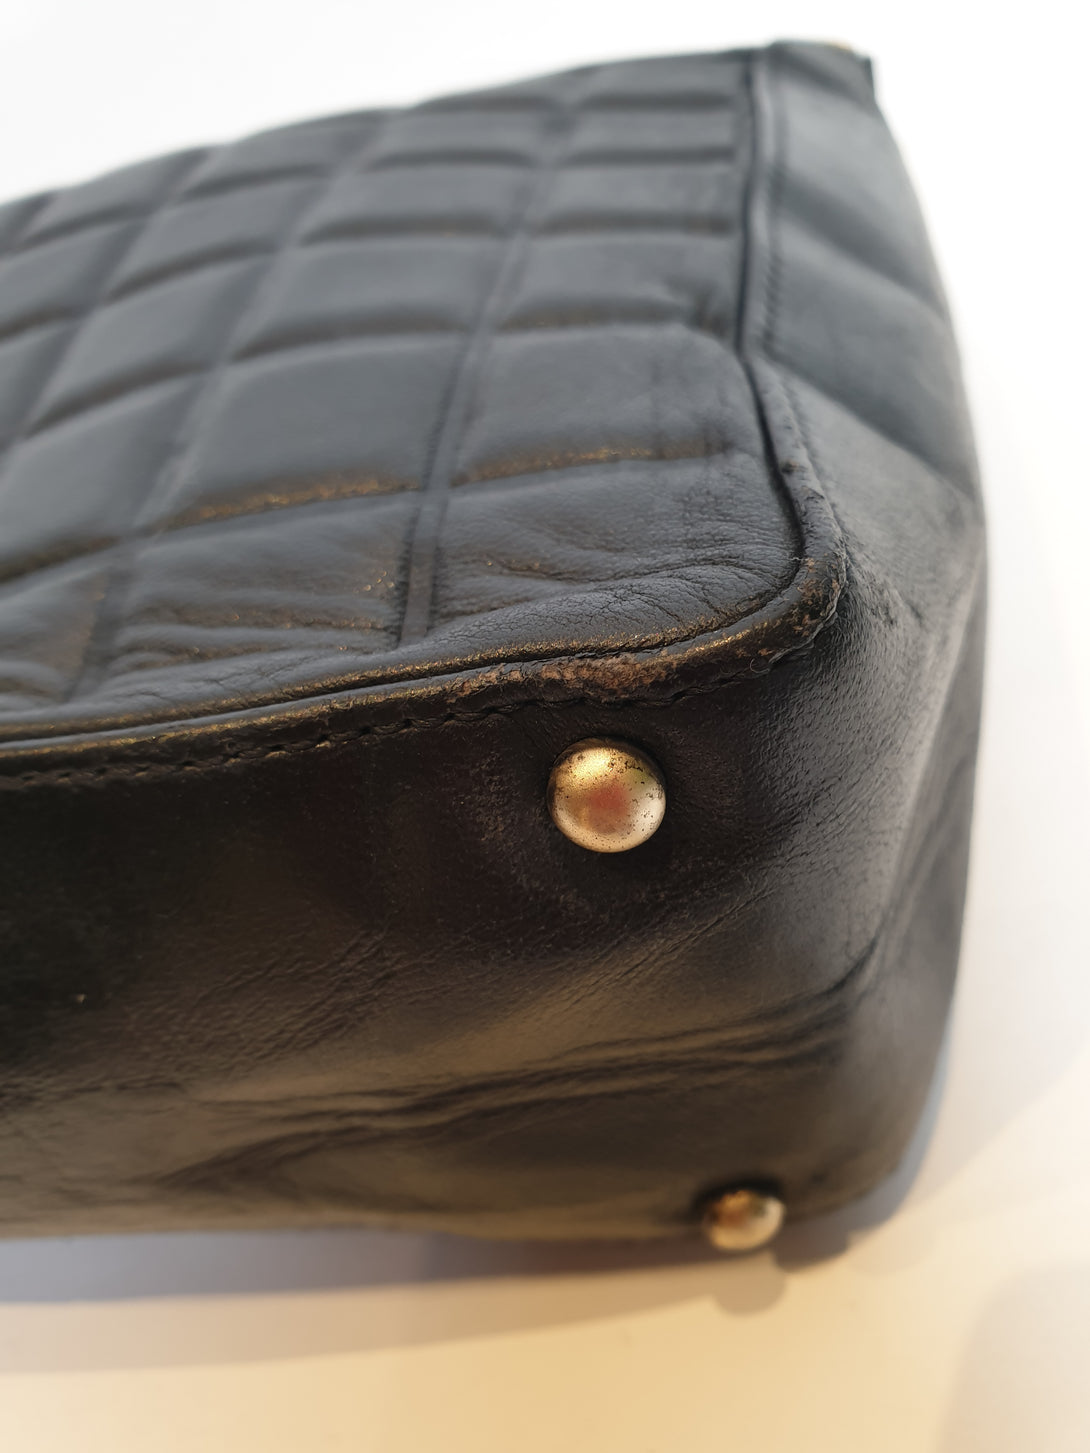 Chanel Black Leather Crossbody - As Seen on Instagram 2/08/2020 - Siopaella Designer Exchange